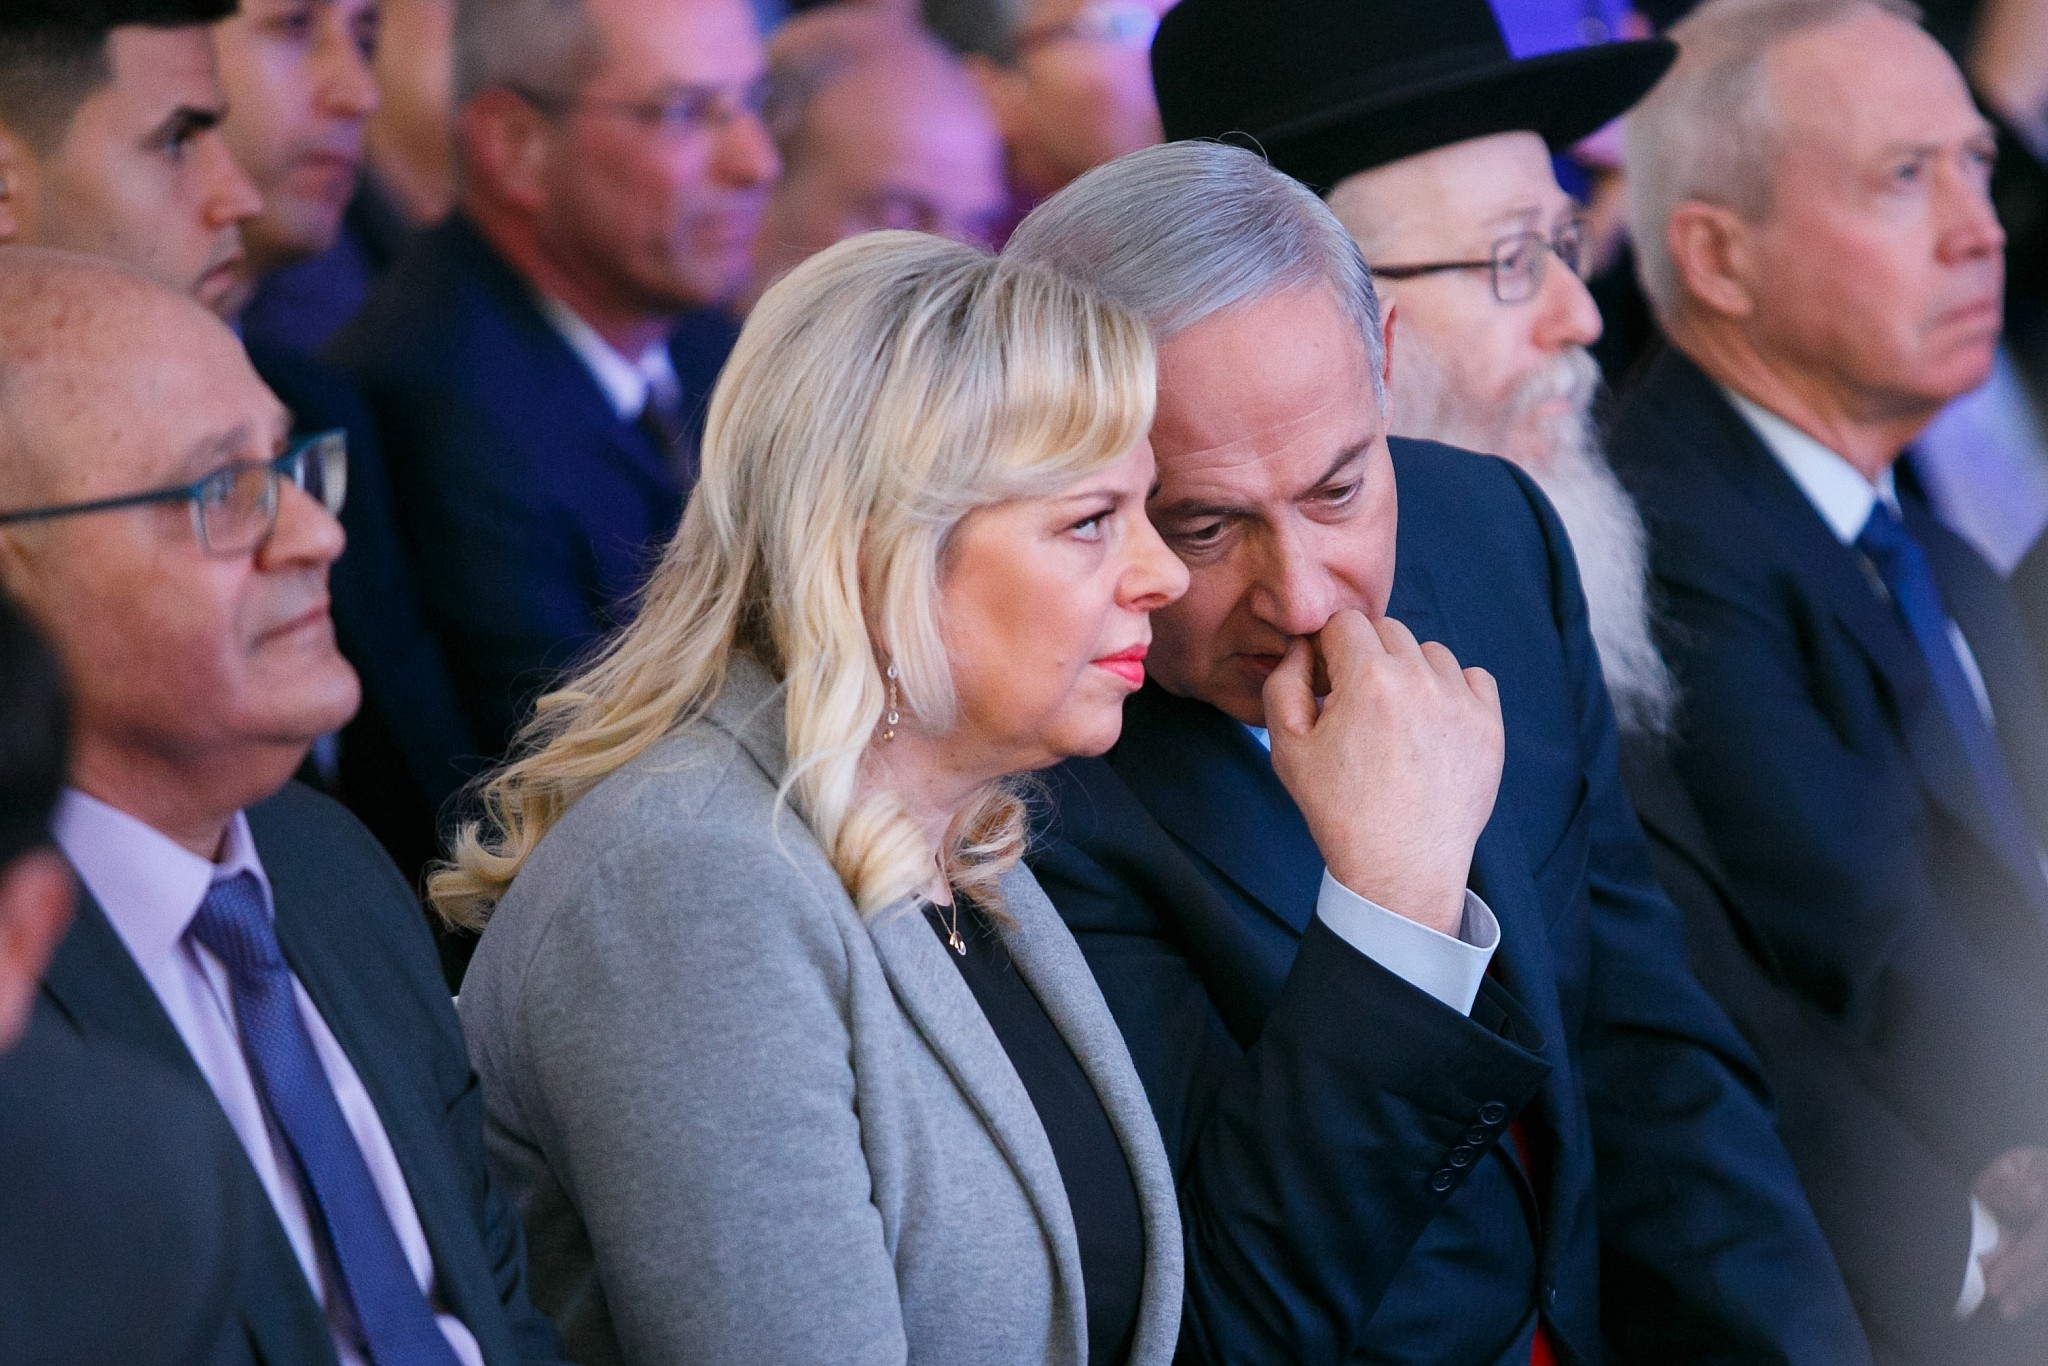 Police said to ban Benjamin, Sara Netanyahu from discussing